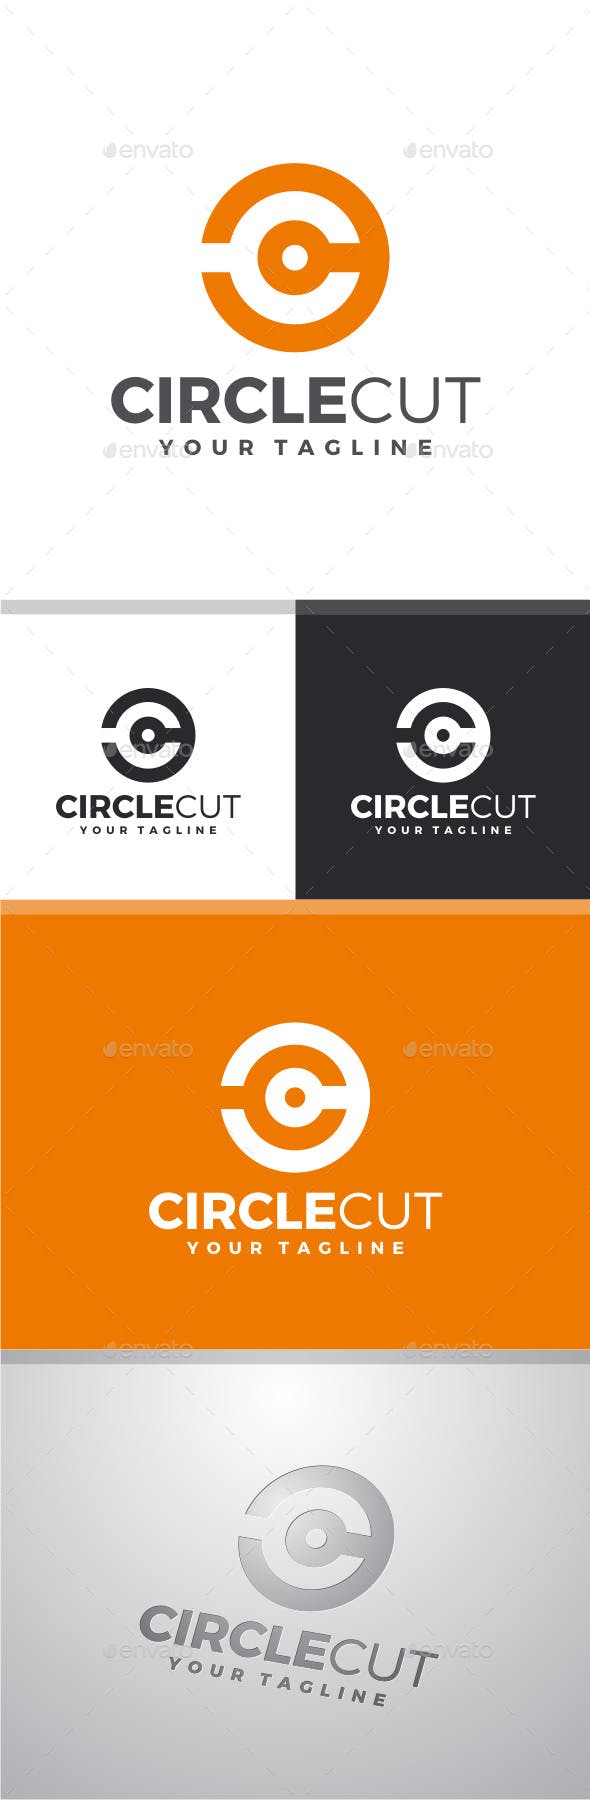 Cut Letter Logo - Circle Cut C Logo